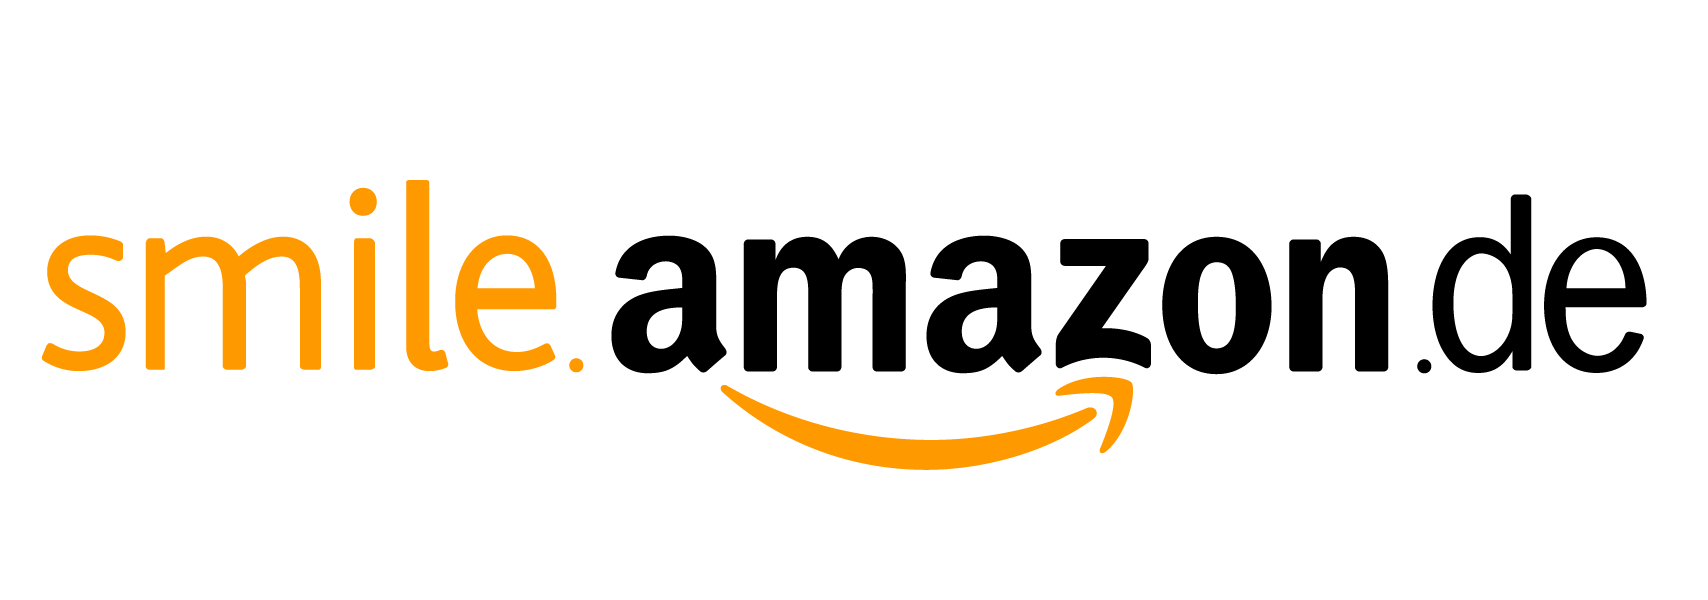 WirHelfen.eu im Amazon Smile Programm